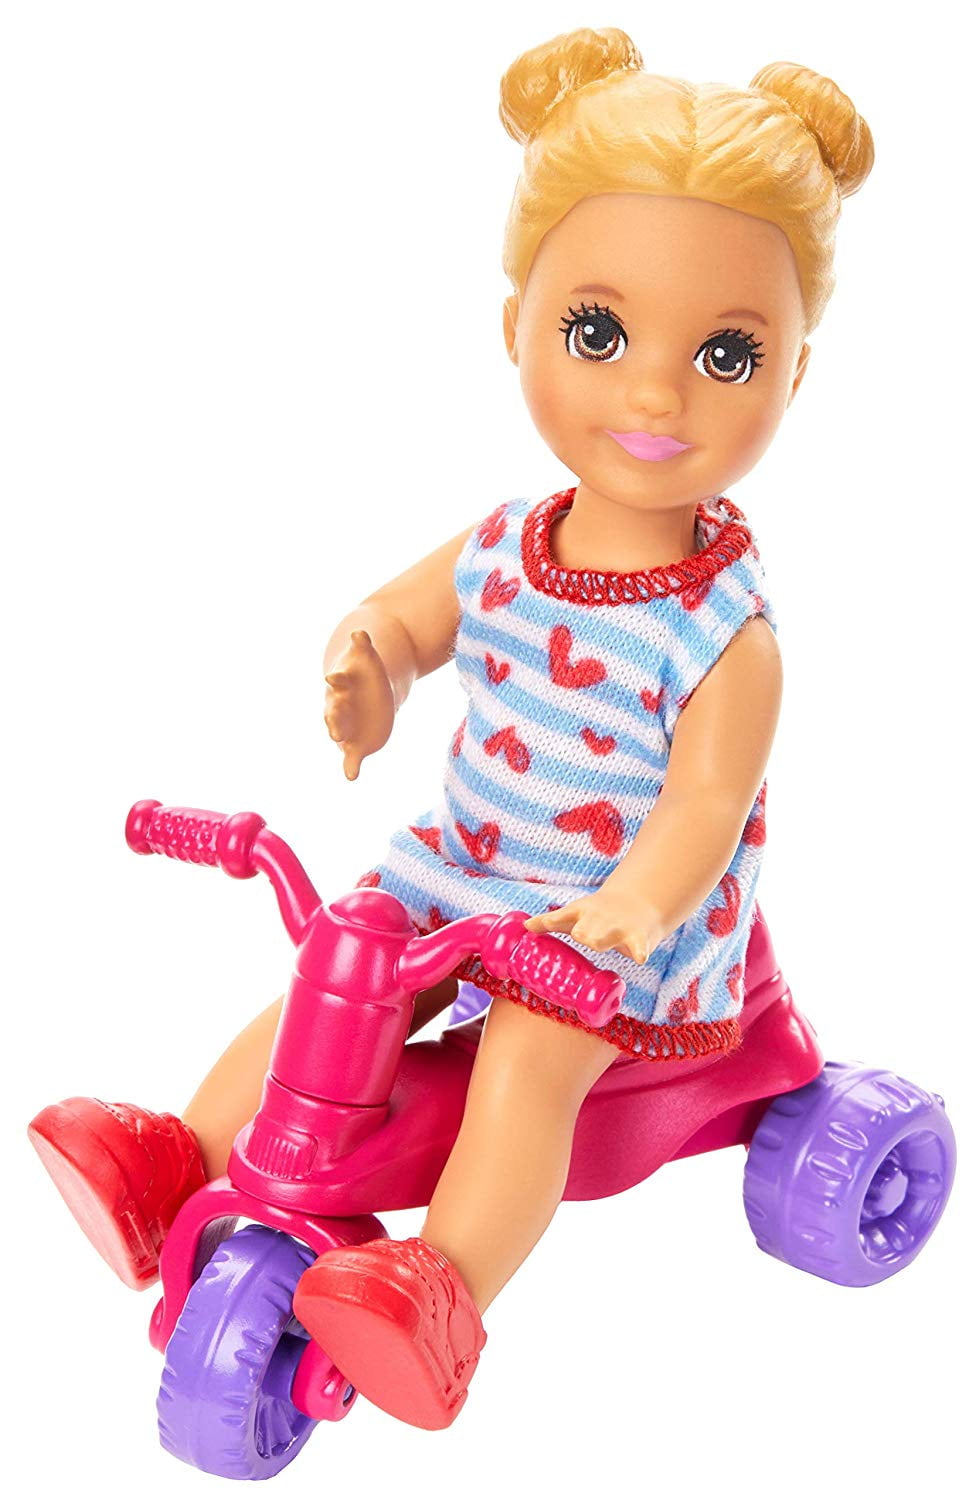 Barbie Skipper Babysitters Inc Doll and Feeding Playset